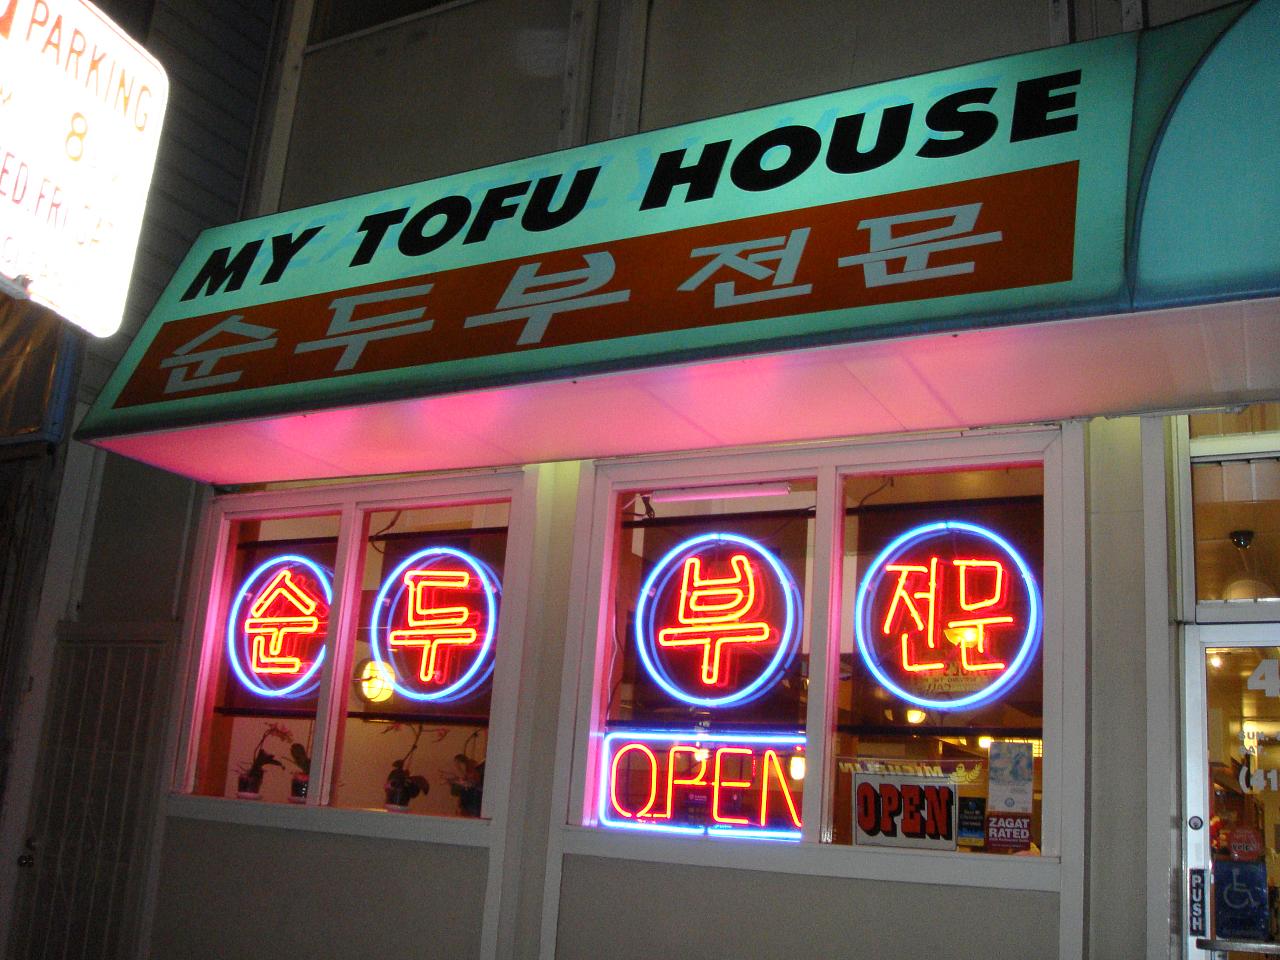 My Tofu House